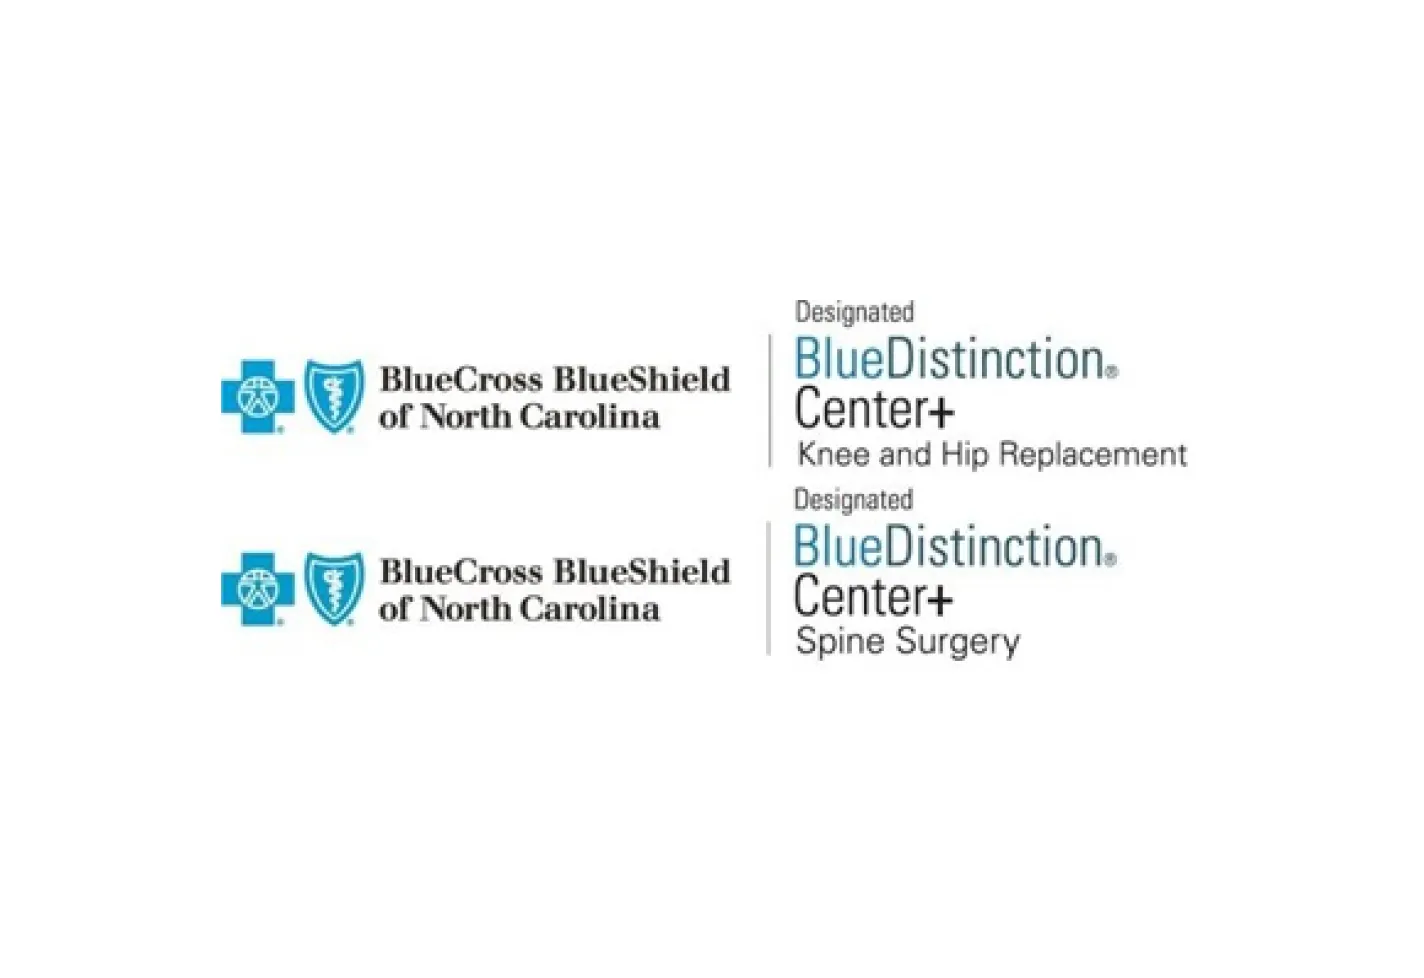 BlueCross BlueShield designated blue distinction plus center - knee/hip replacement, spine surgery